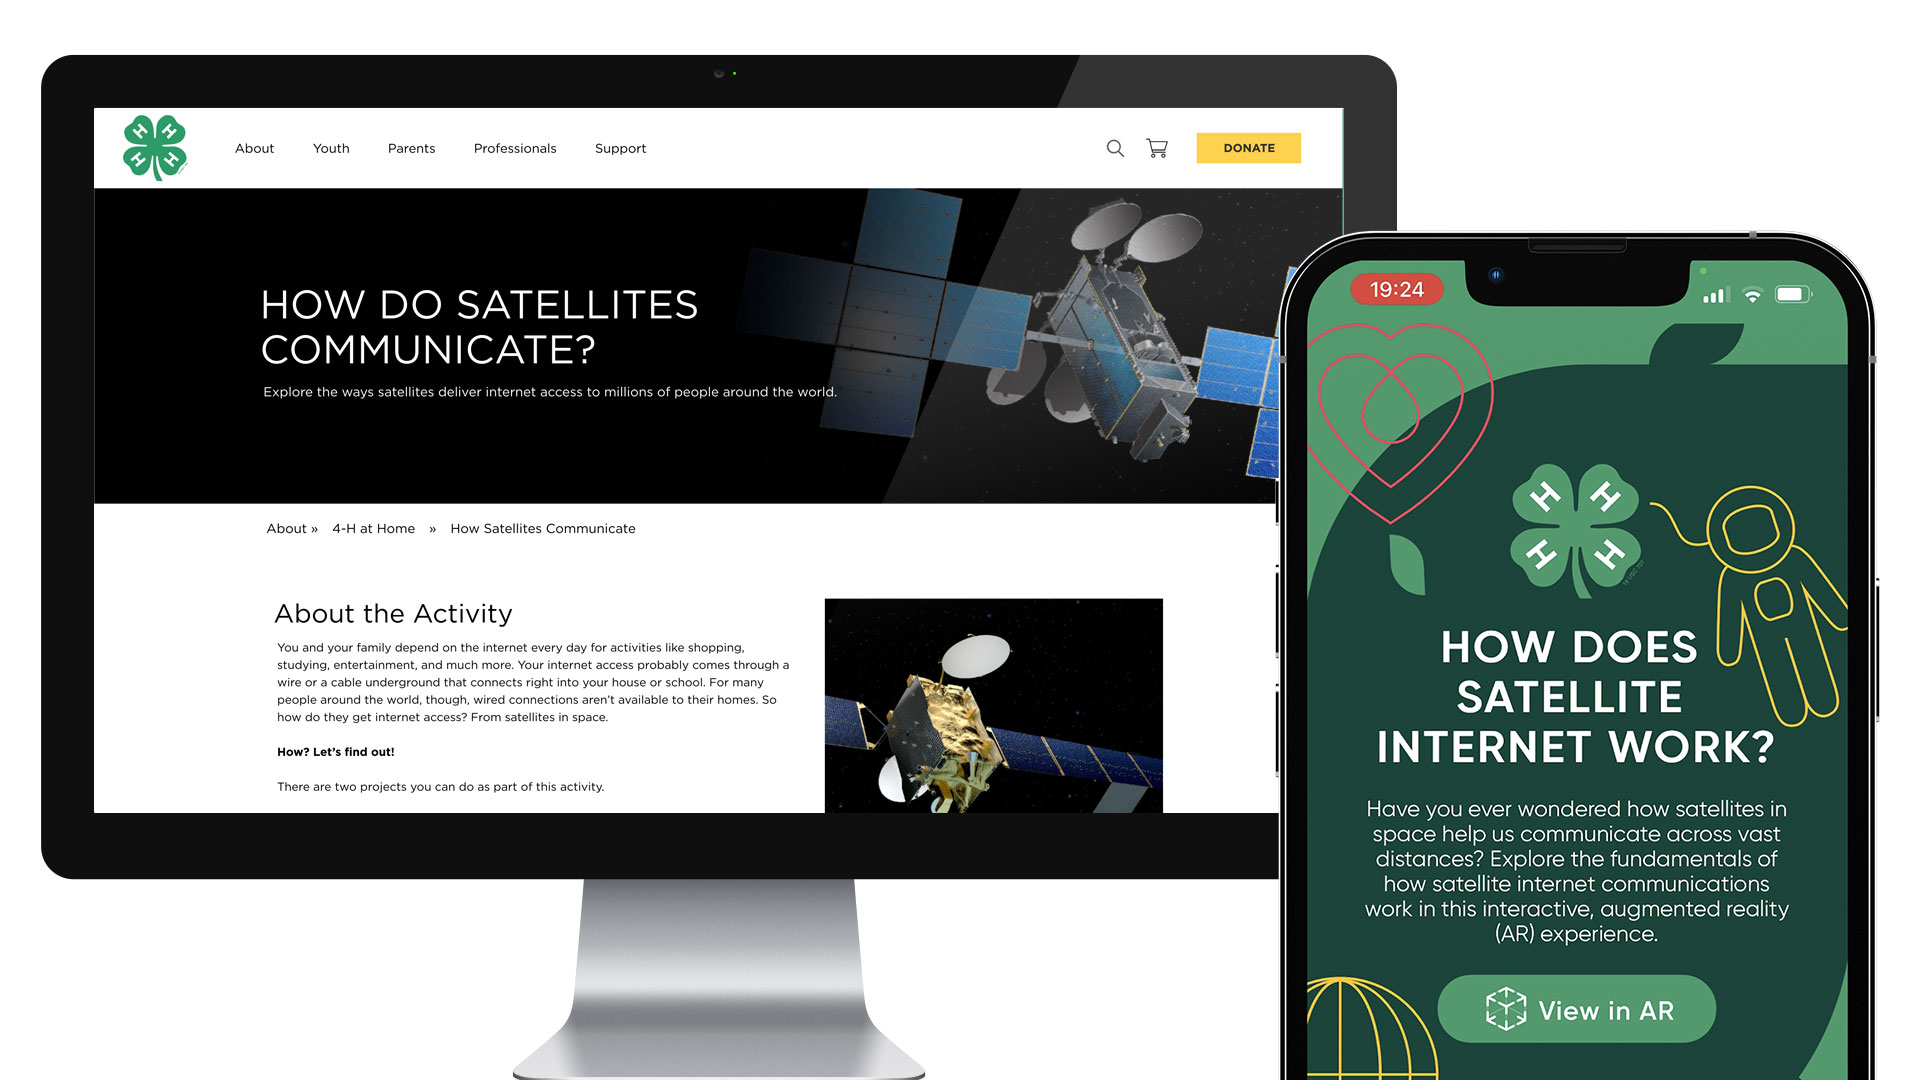 National 4-H Council HughesNet Satellite AR Experience 